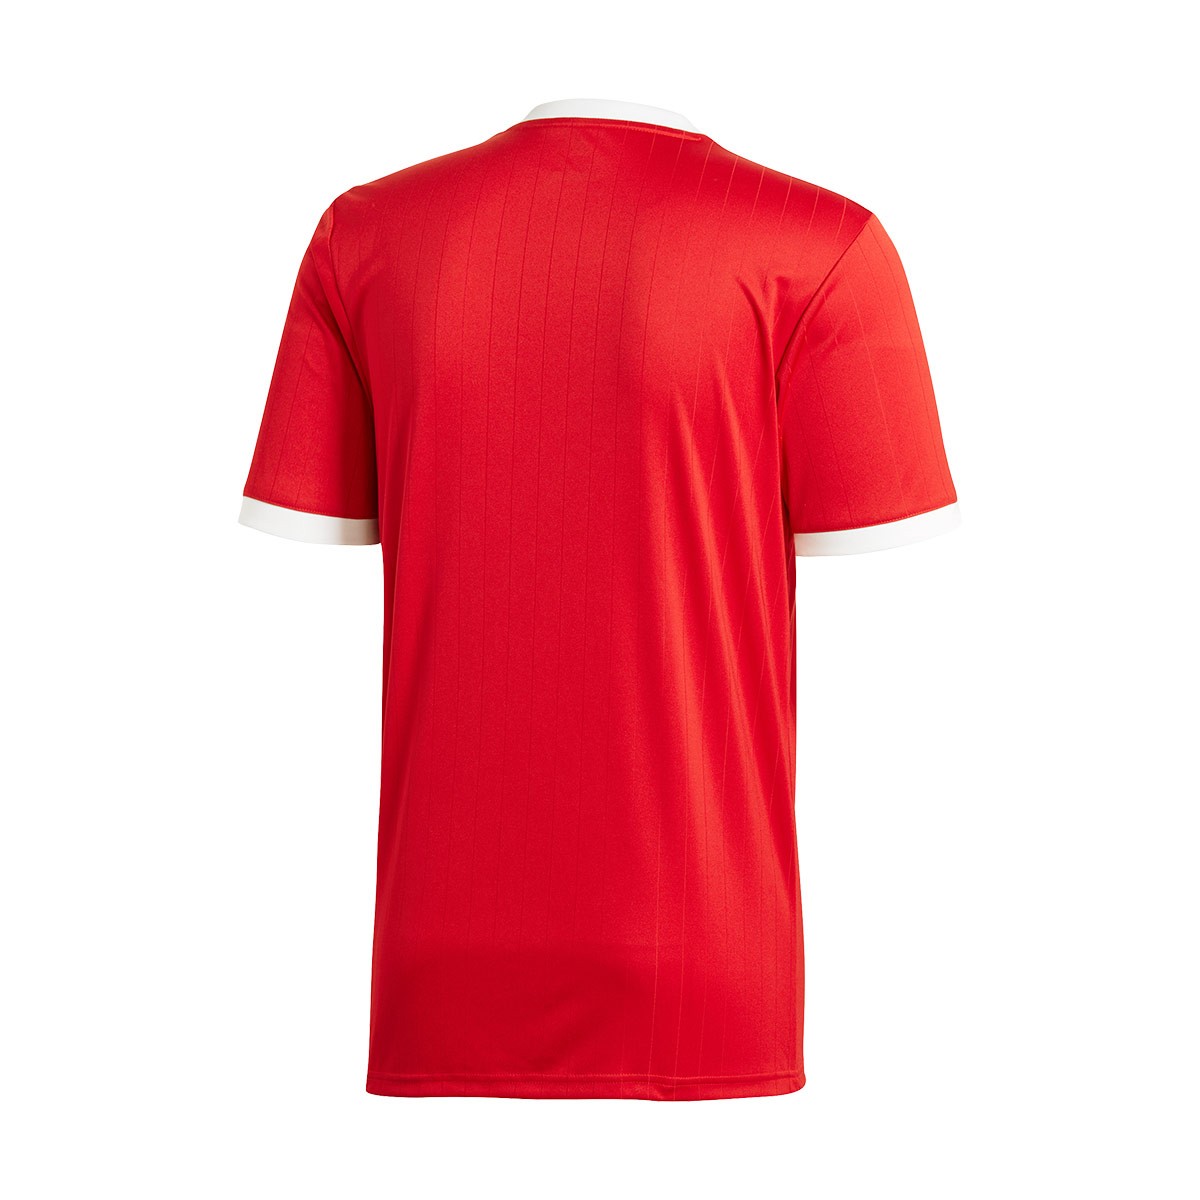 power red adidas shirt